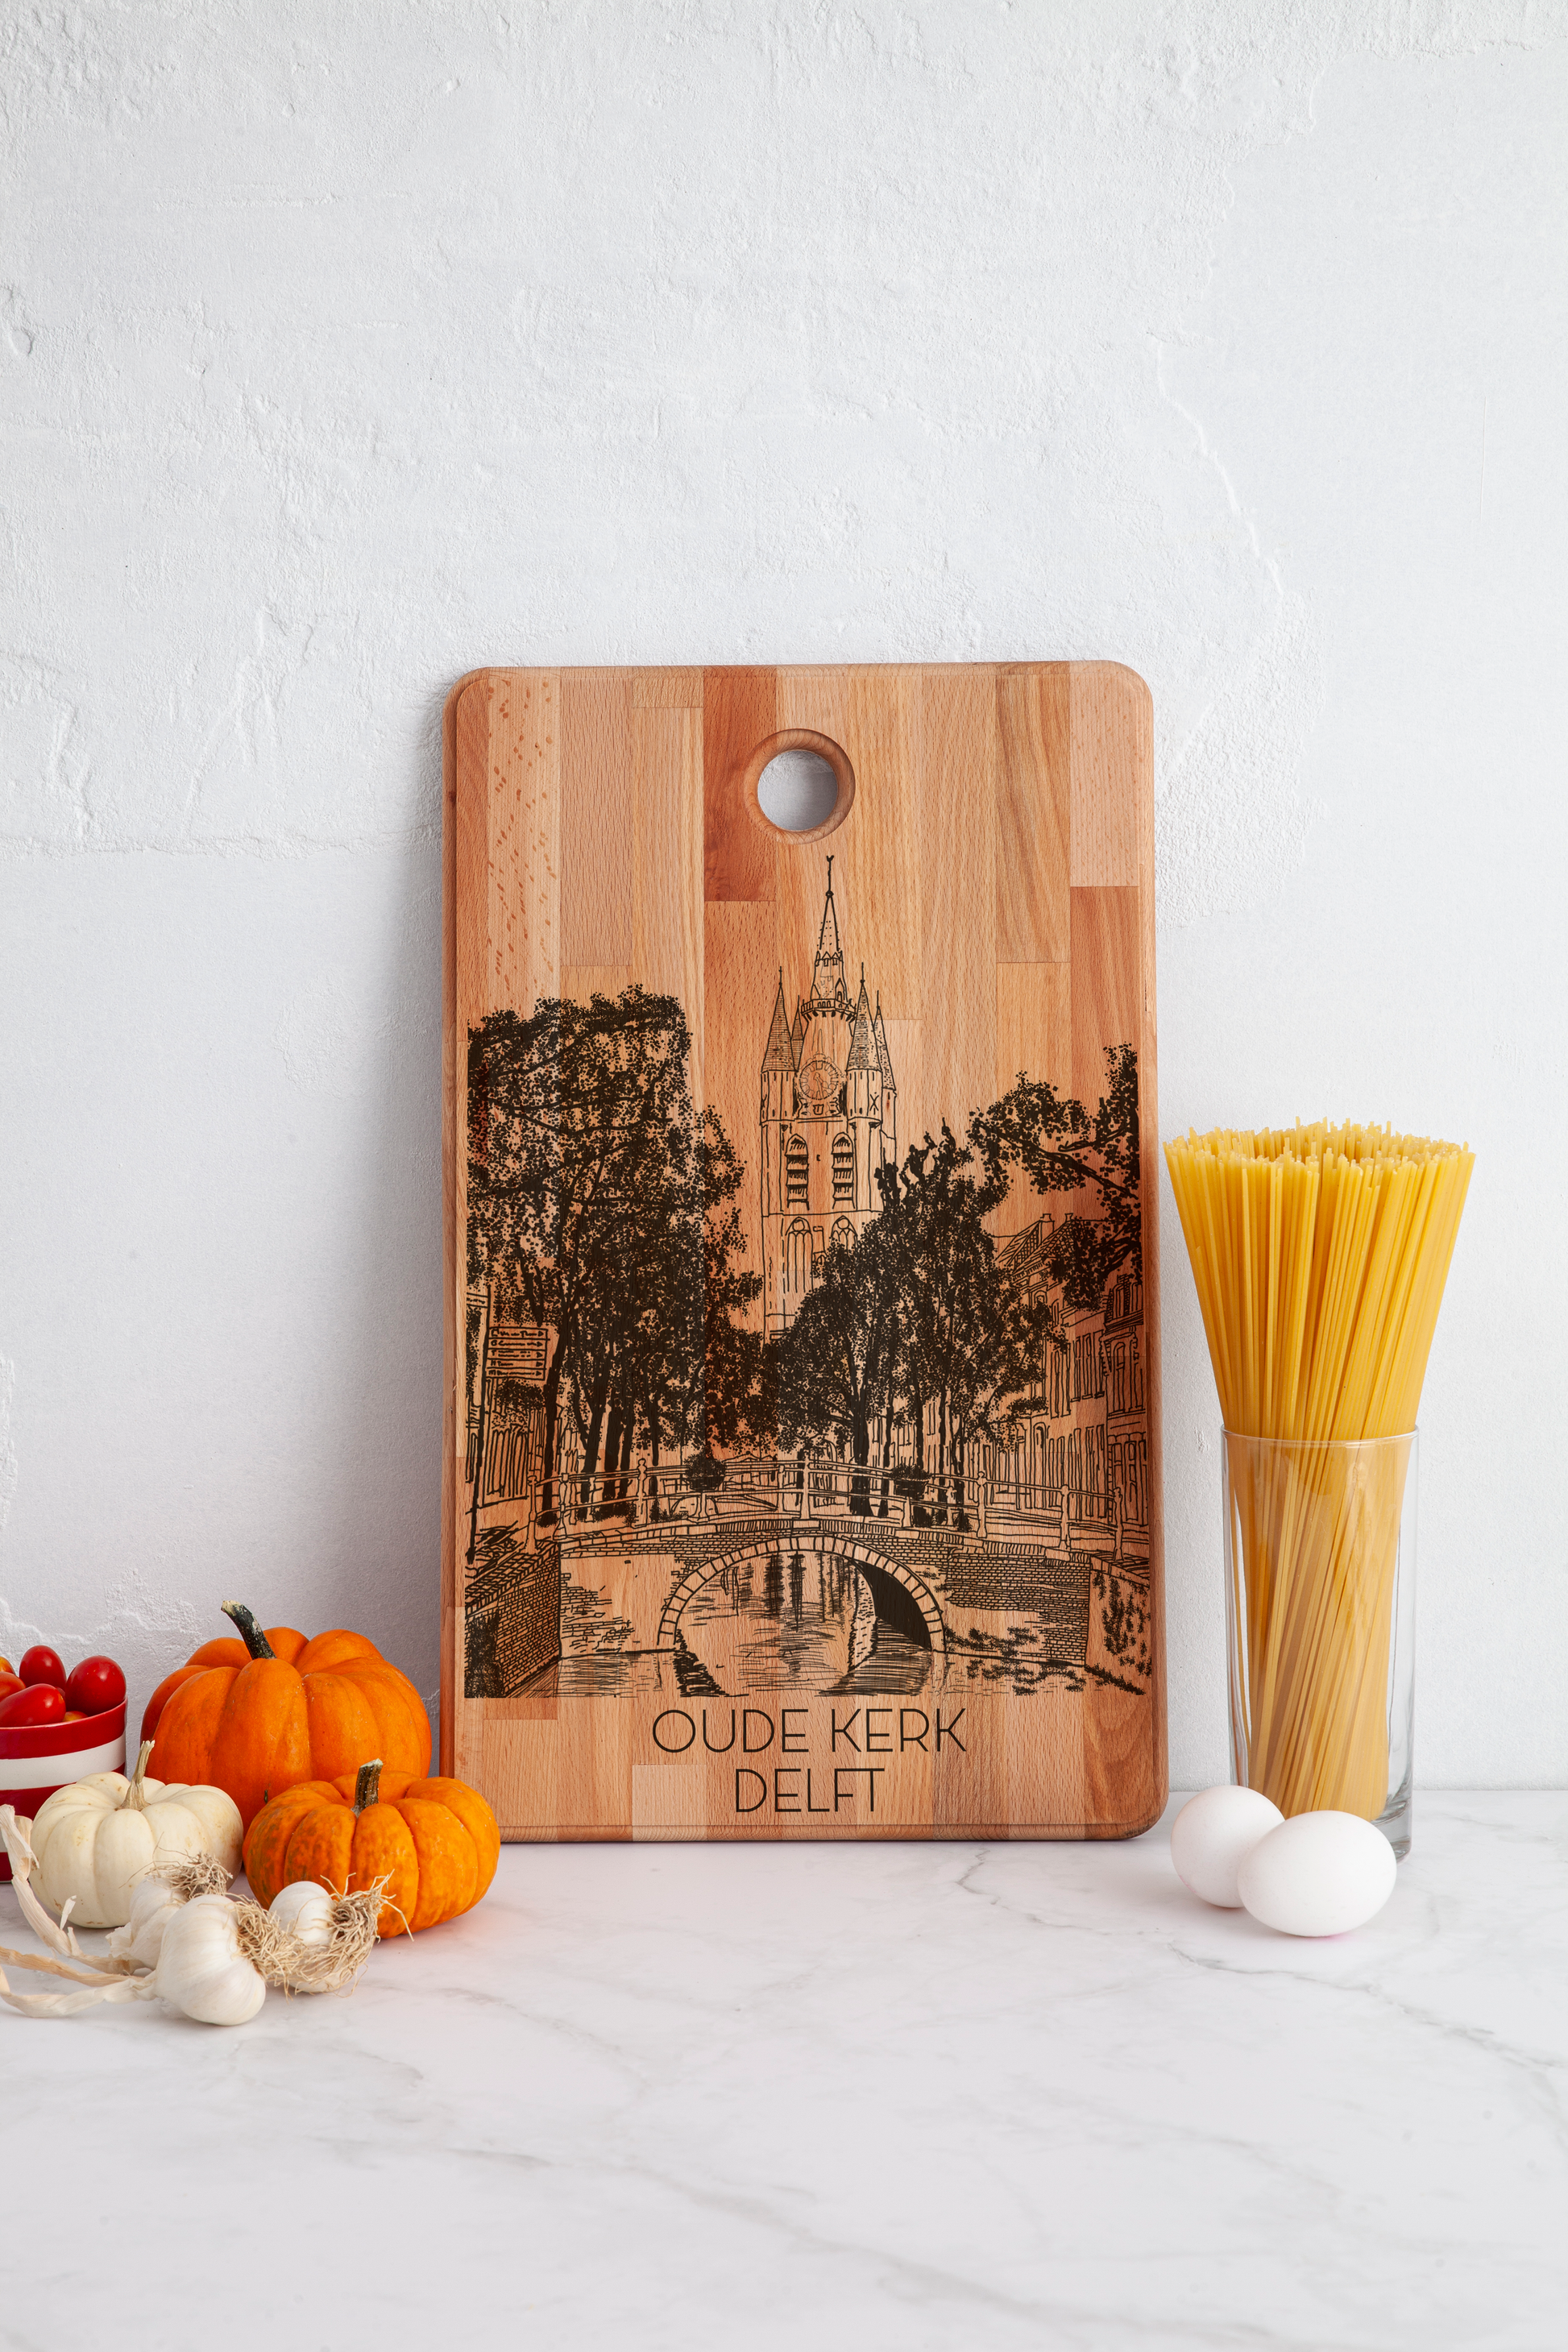 Delft, Oude Kerk, cutting board, in kitchen